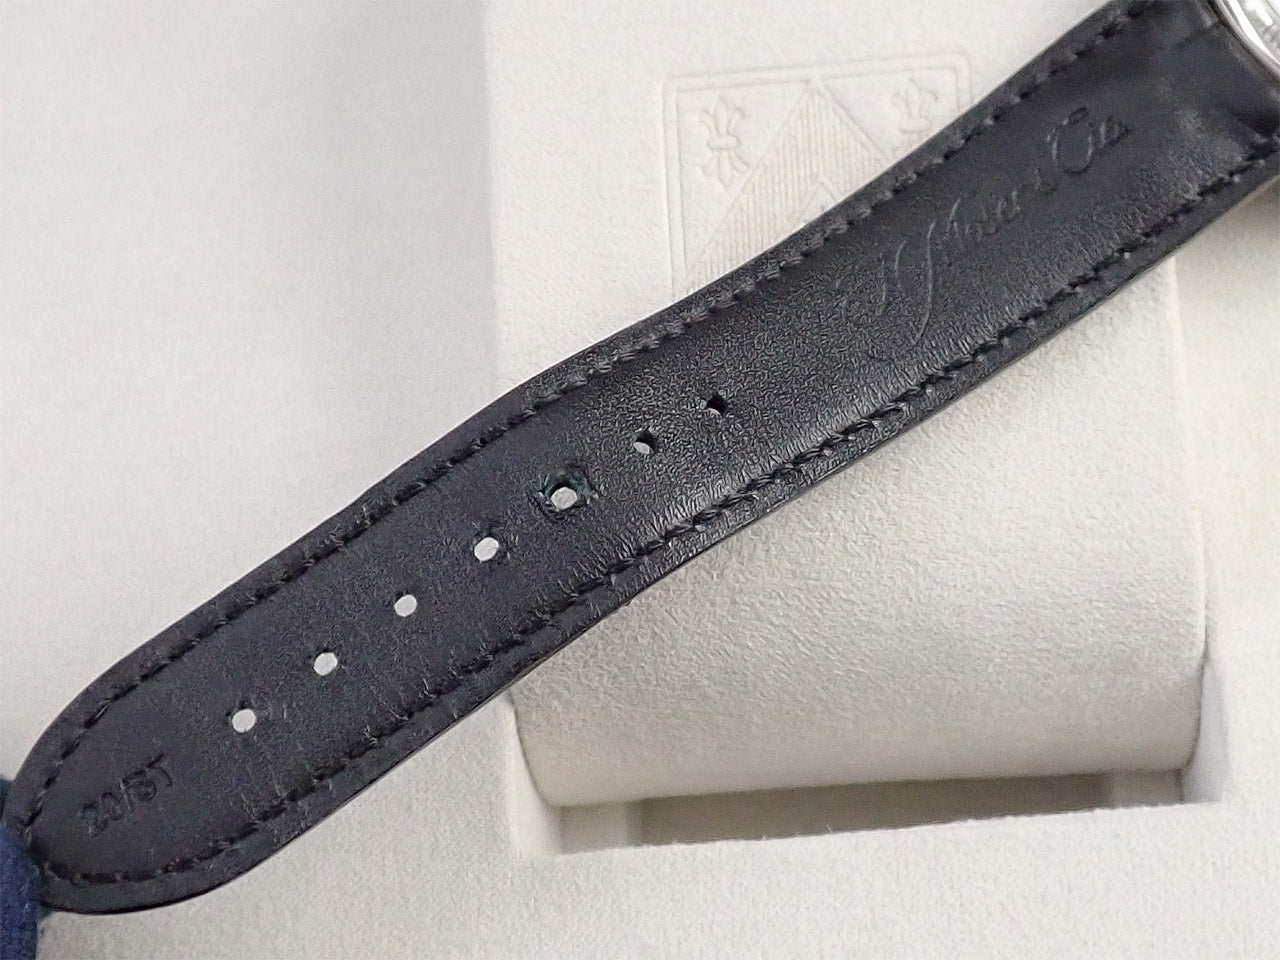 H. Moser &amp; Cie. Venture Concept Vantablack Black Hands &lt;Warranty, Box, etc.&gt;